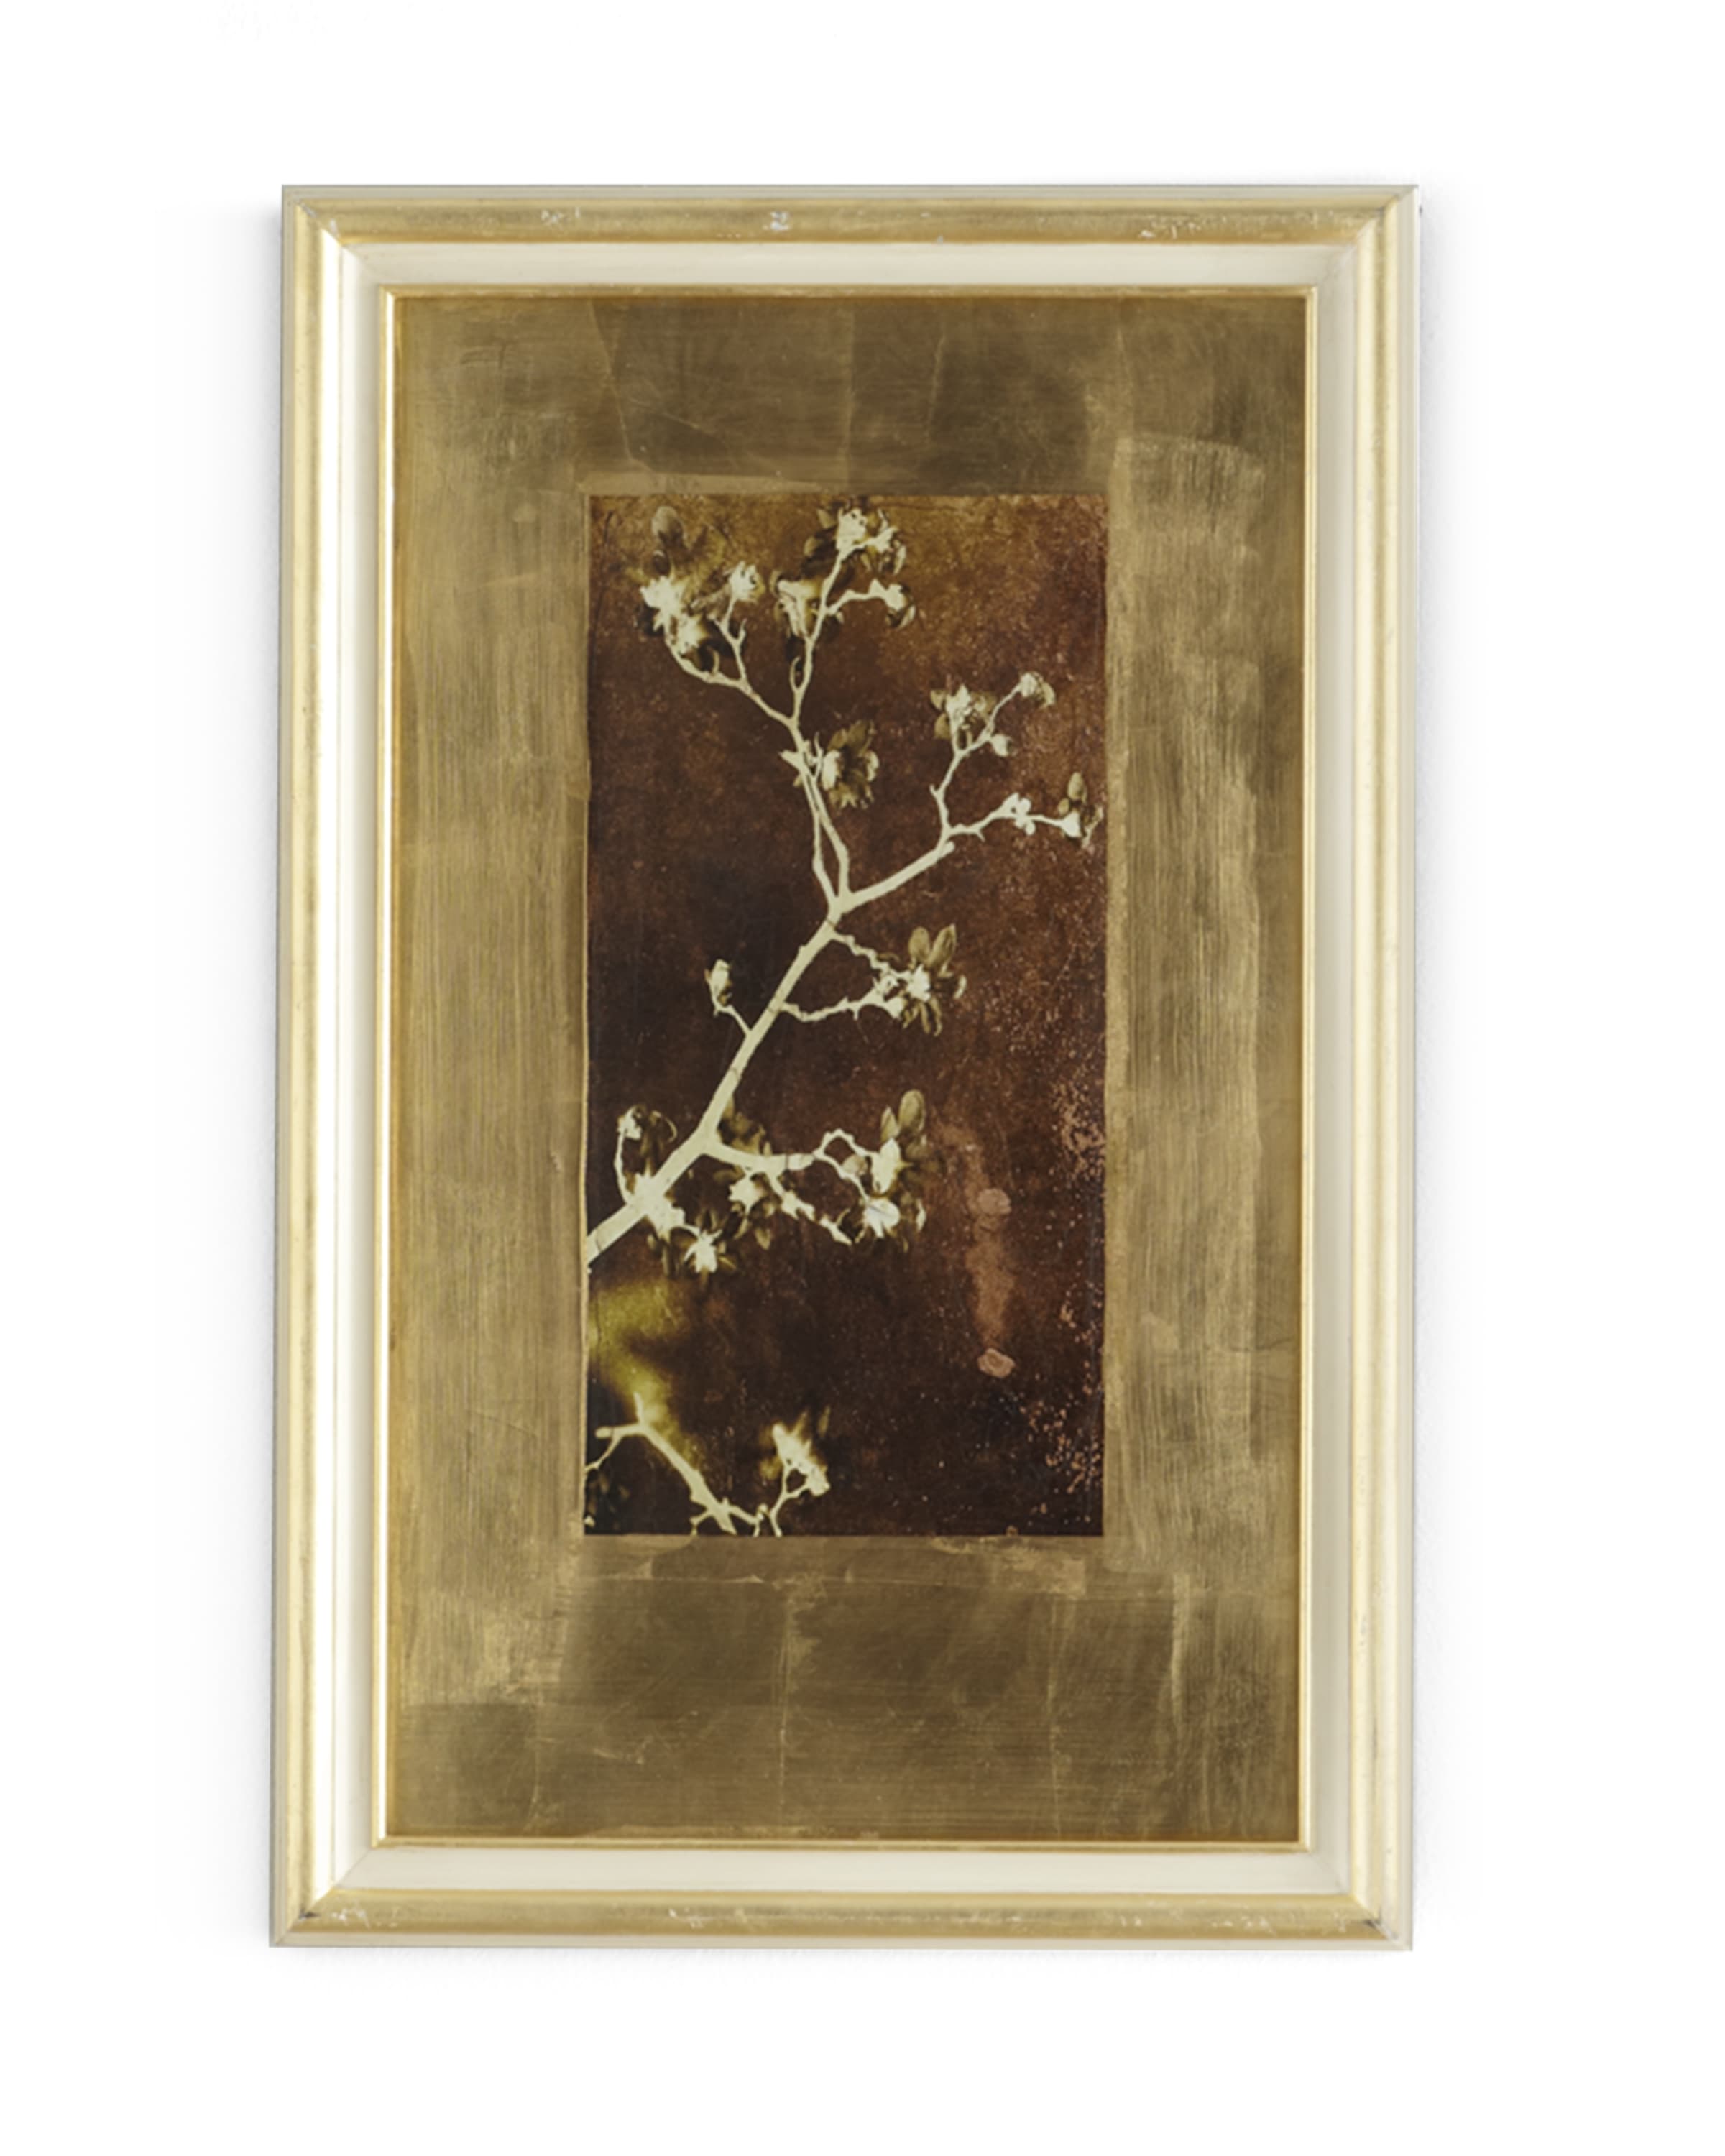 John-Richard Collection "Gold Leaf Branches I" Print